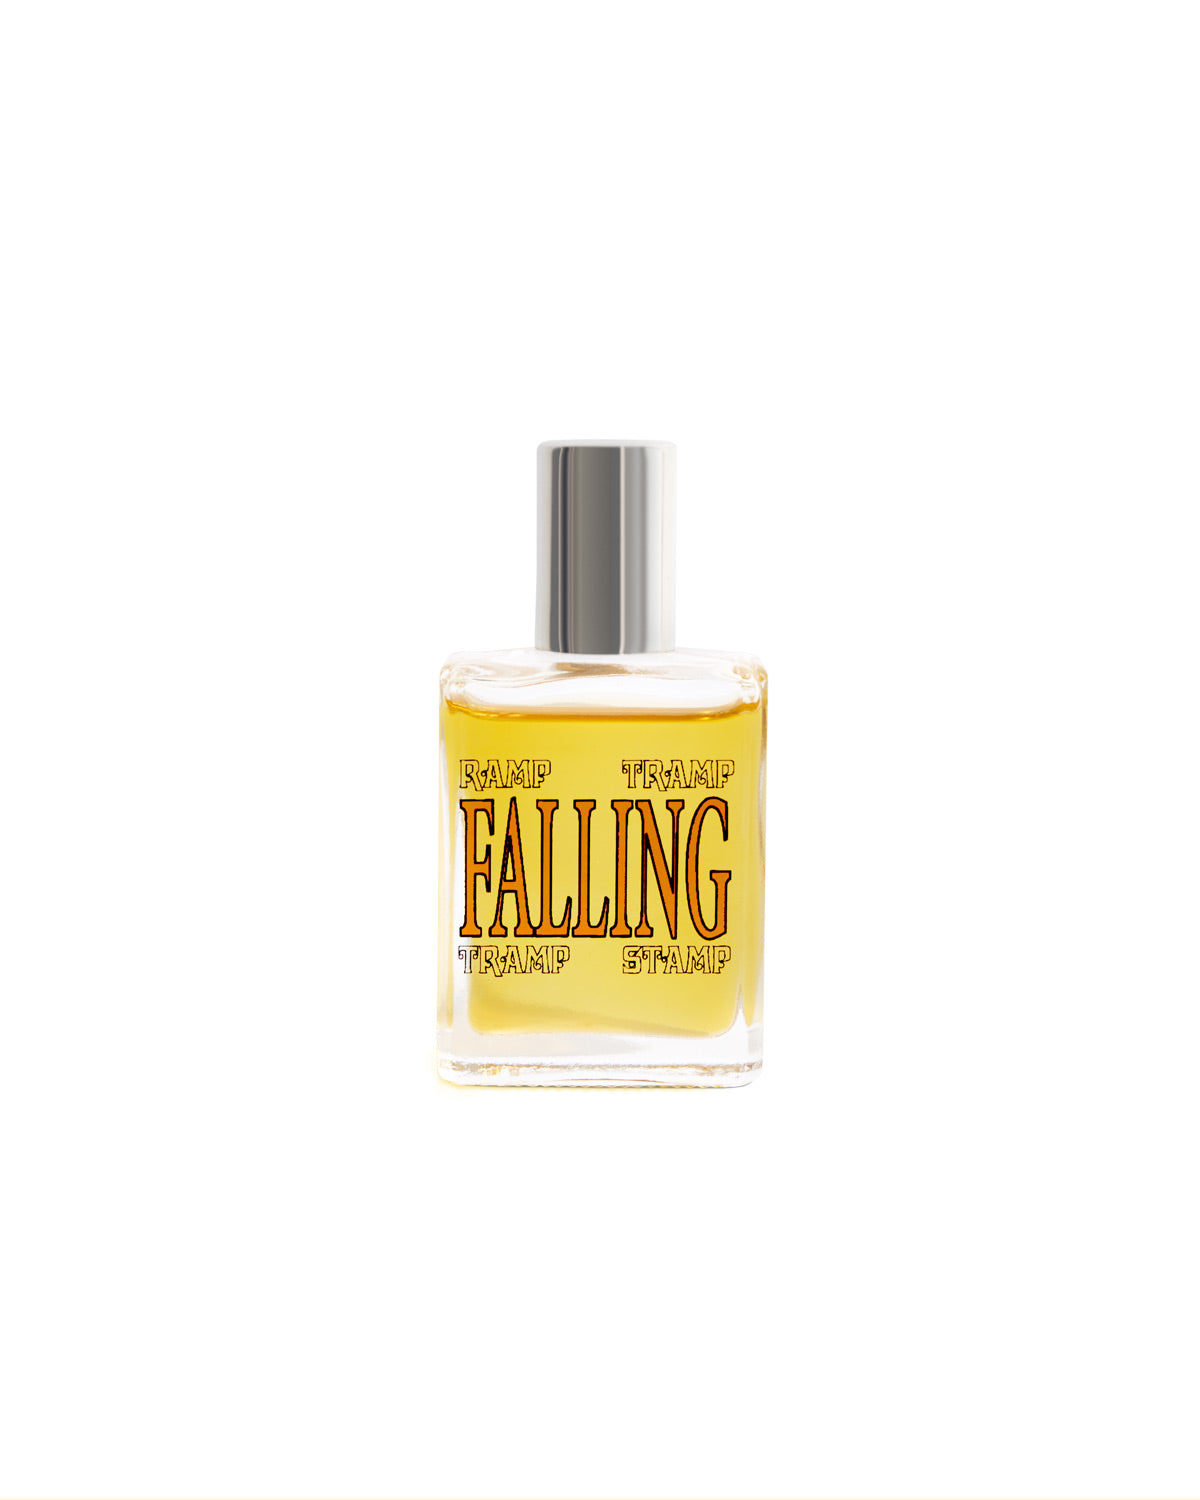 REFILL - FALLING huile de parfum / perfume oil